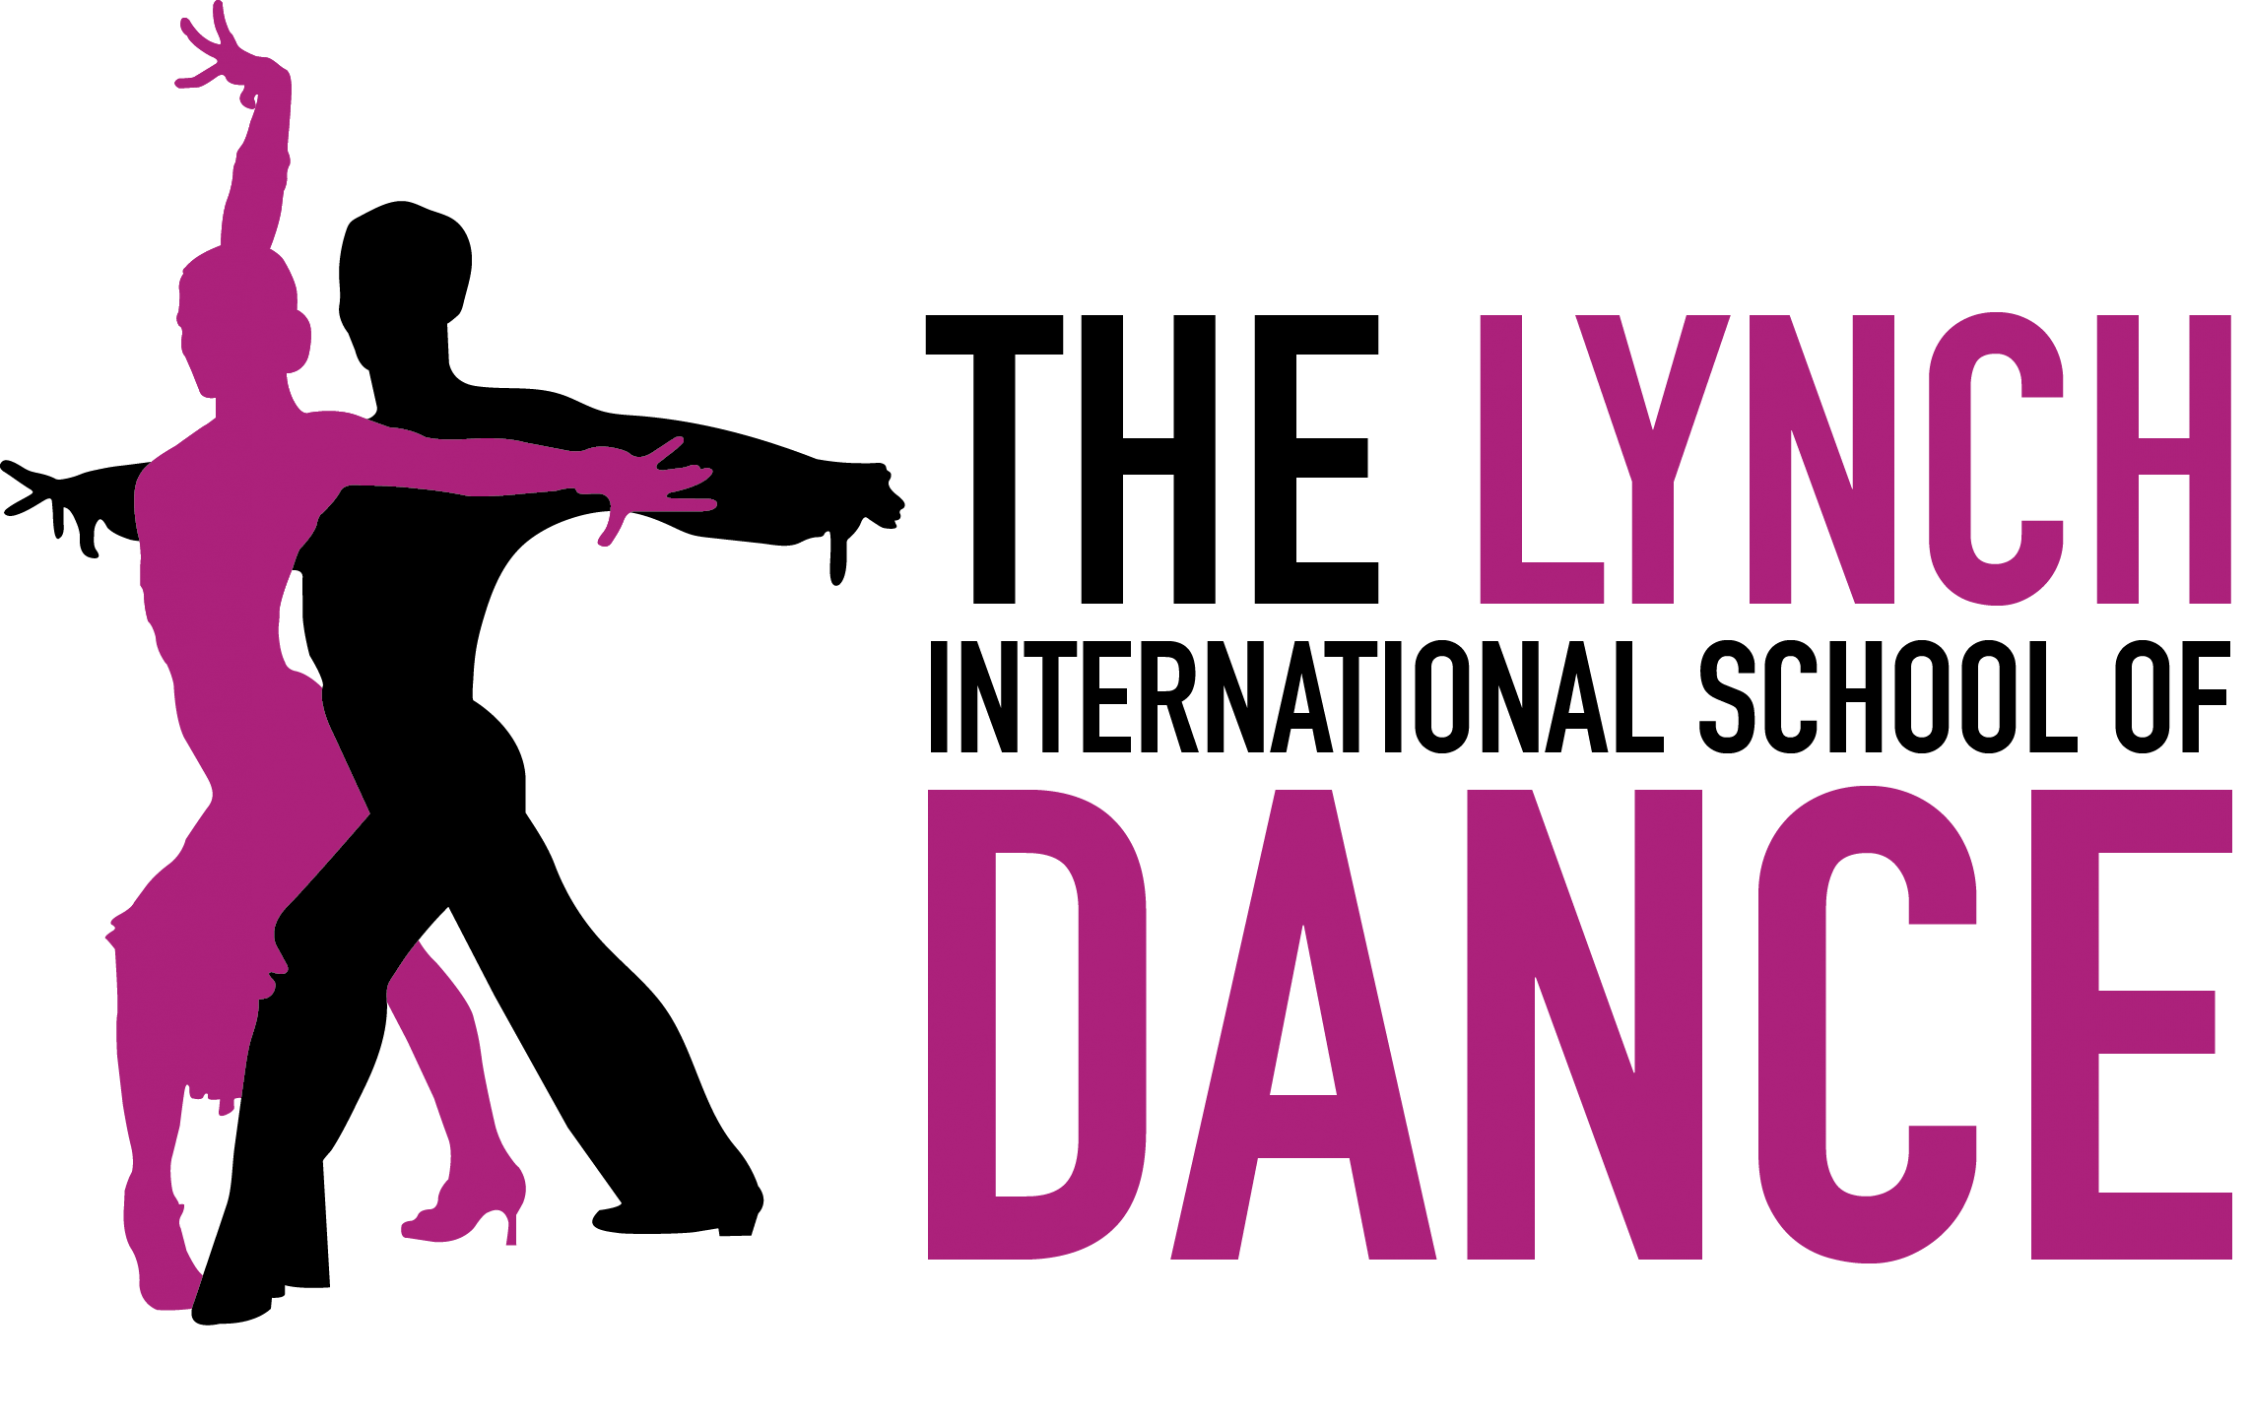 The Lynch International School Of Dance